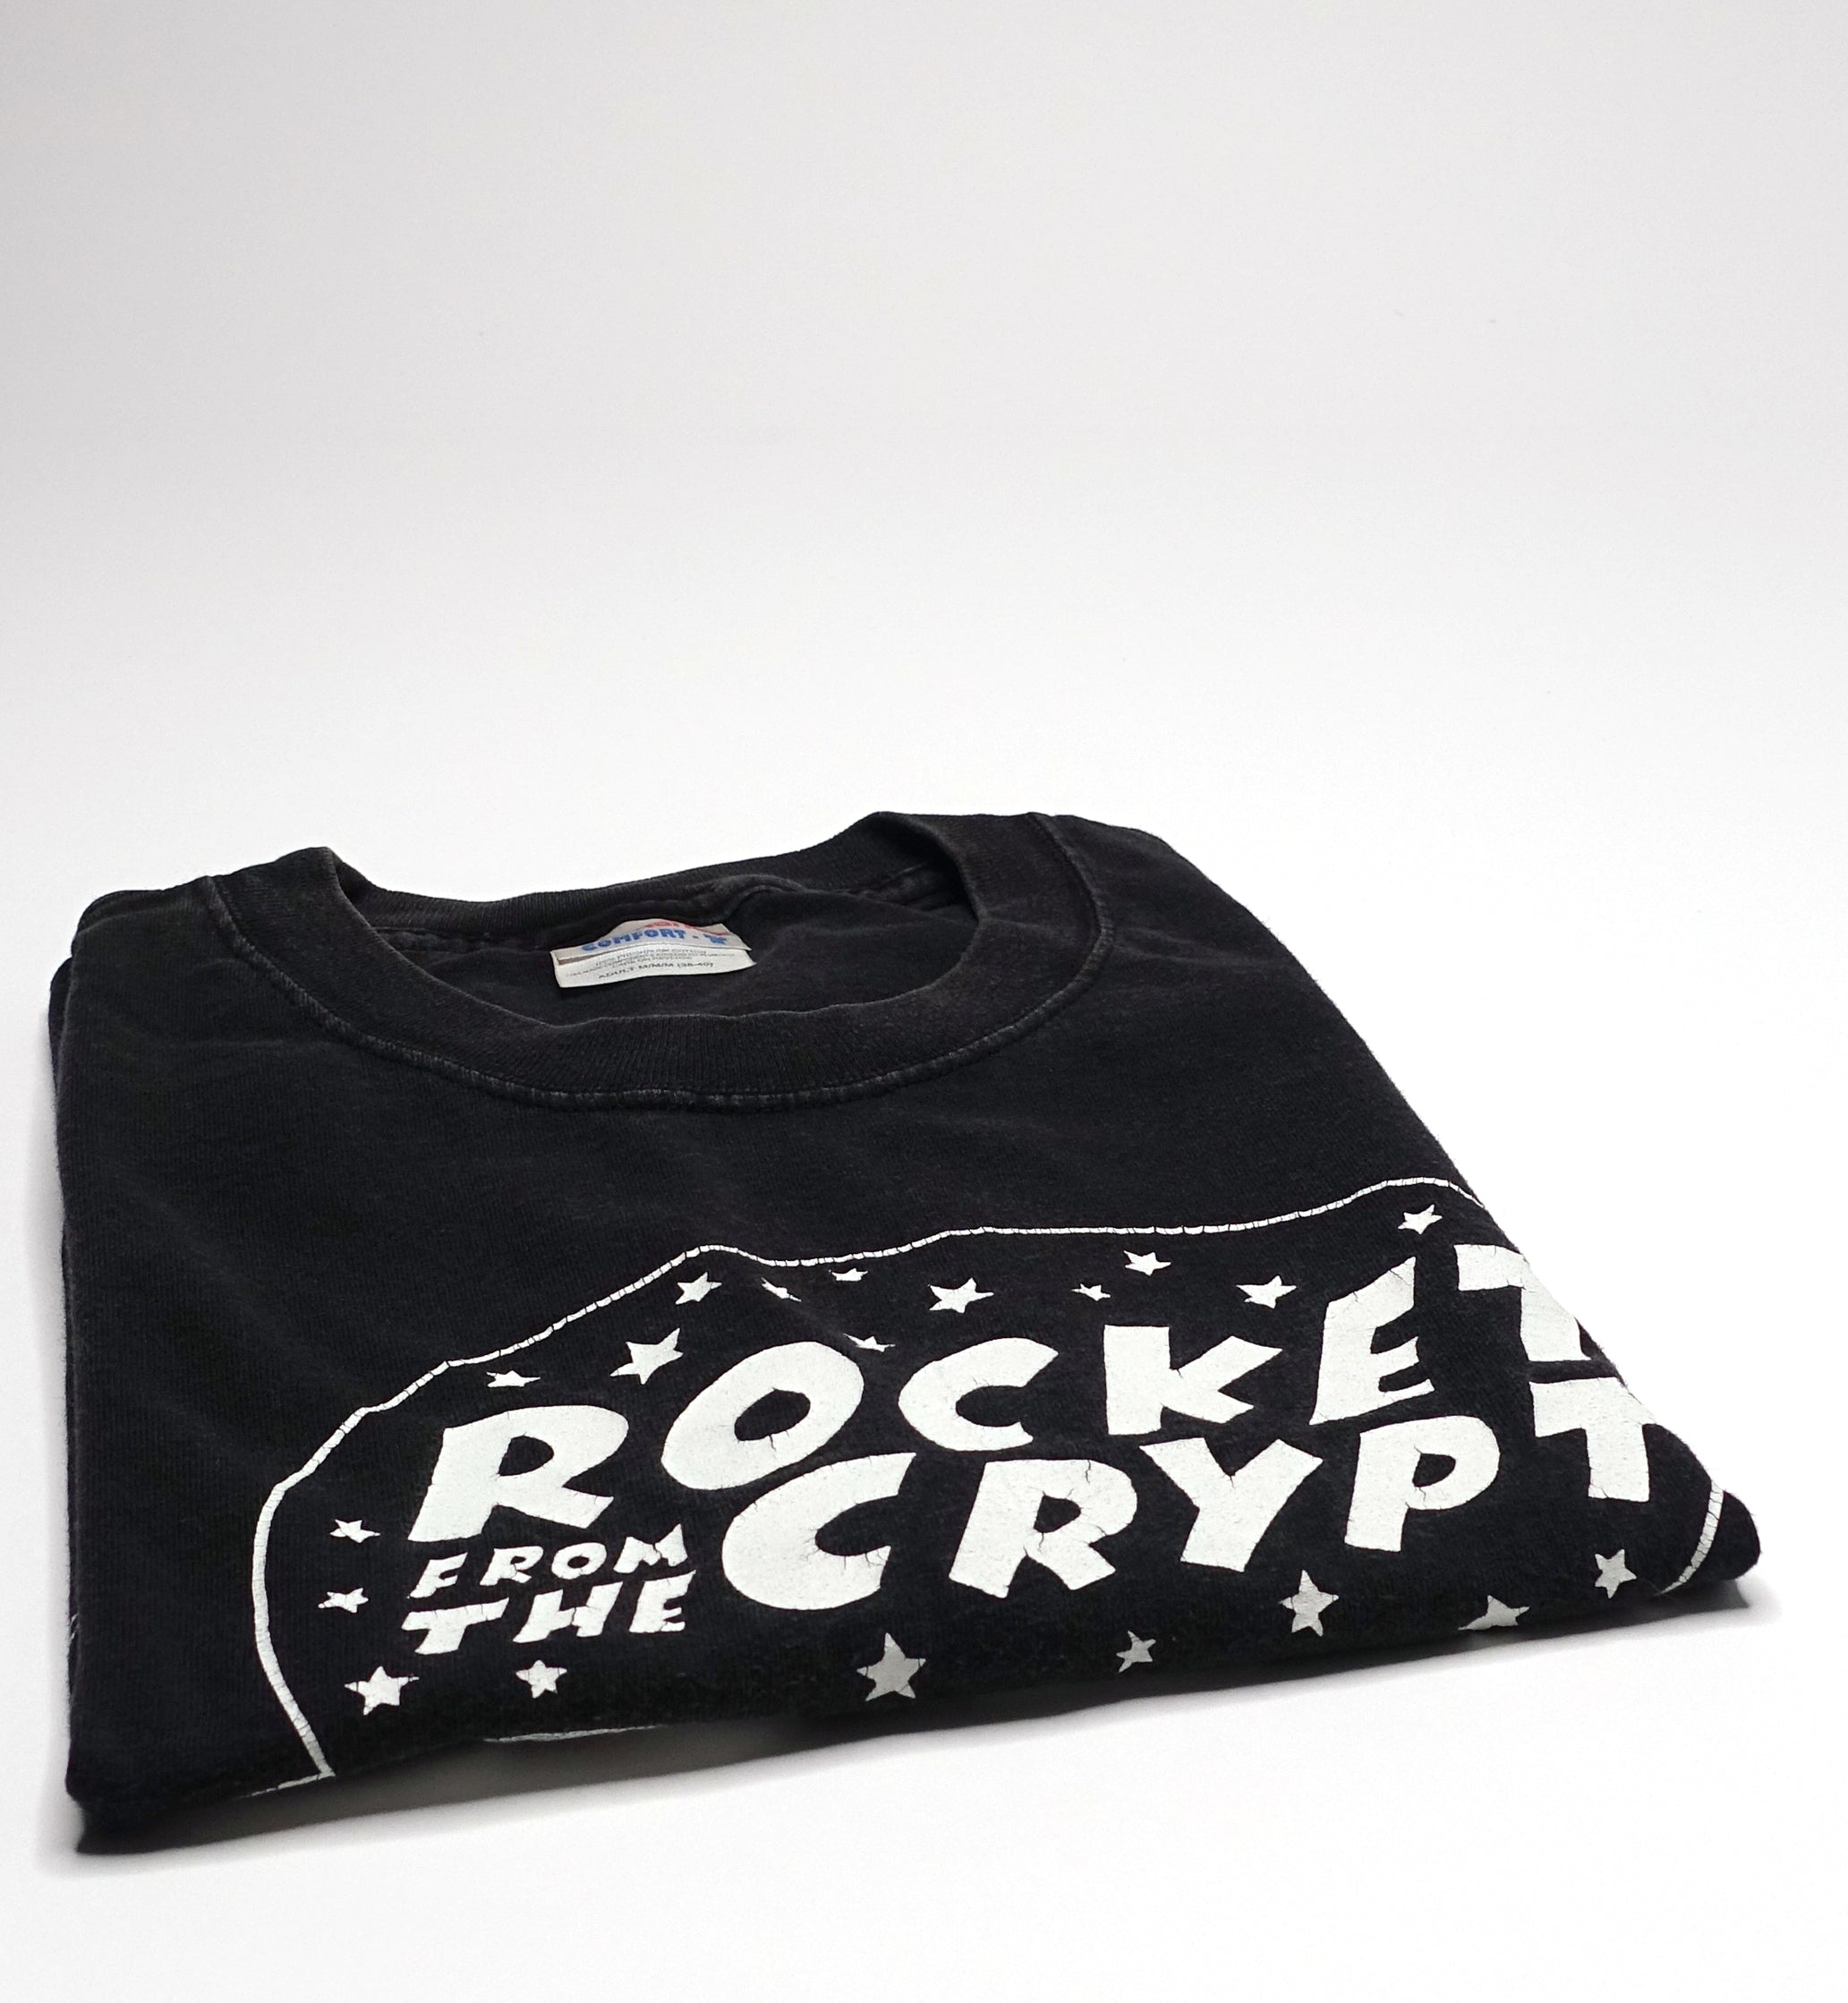 Rocket From The Crypt - Moon Rocket Tour Shirt Size Medium